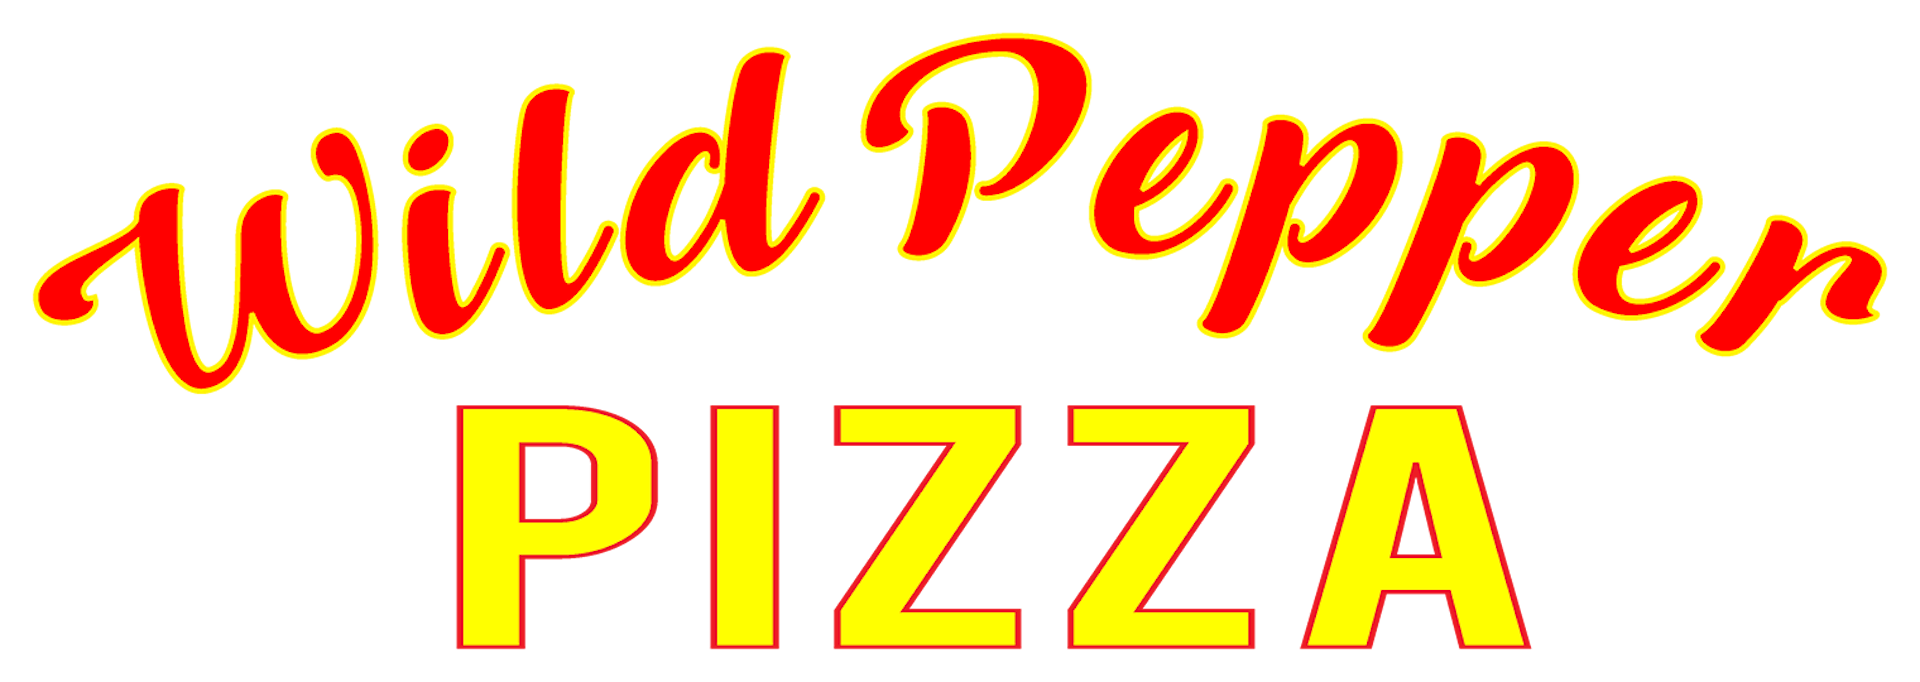 Wild Pepper Pizza 2